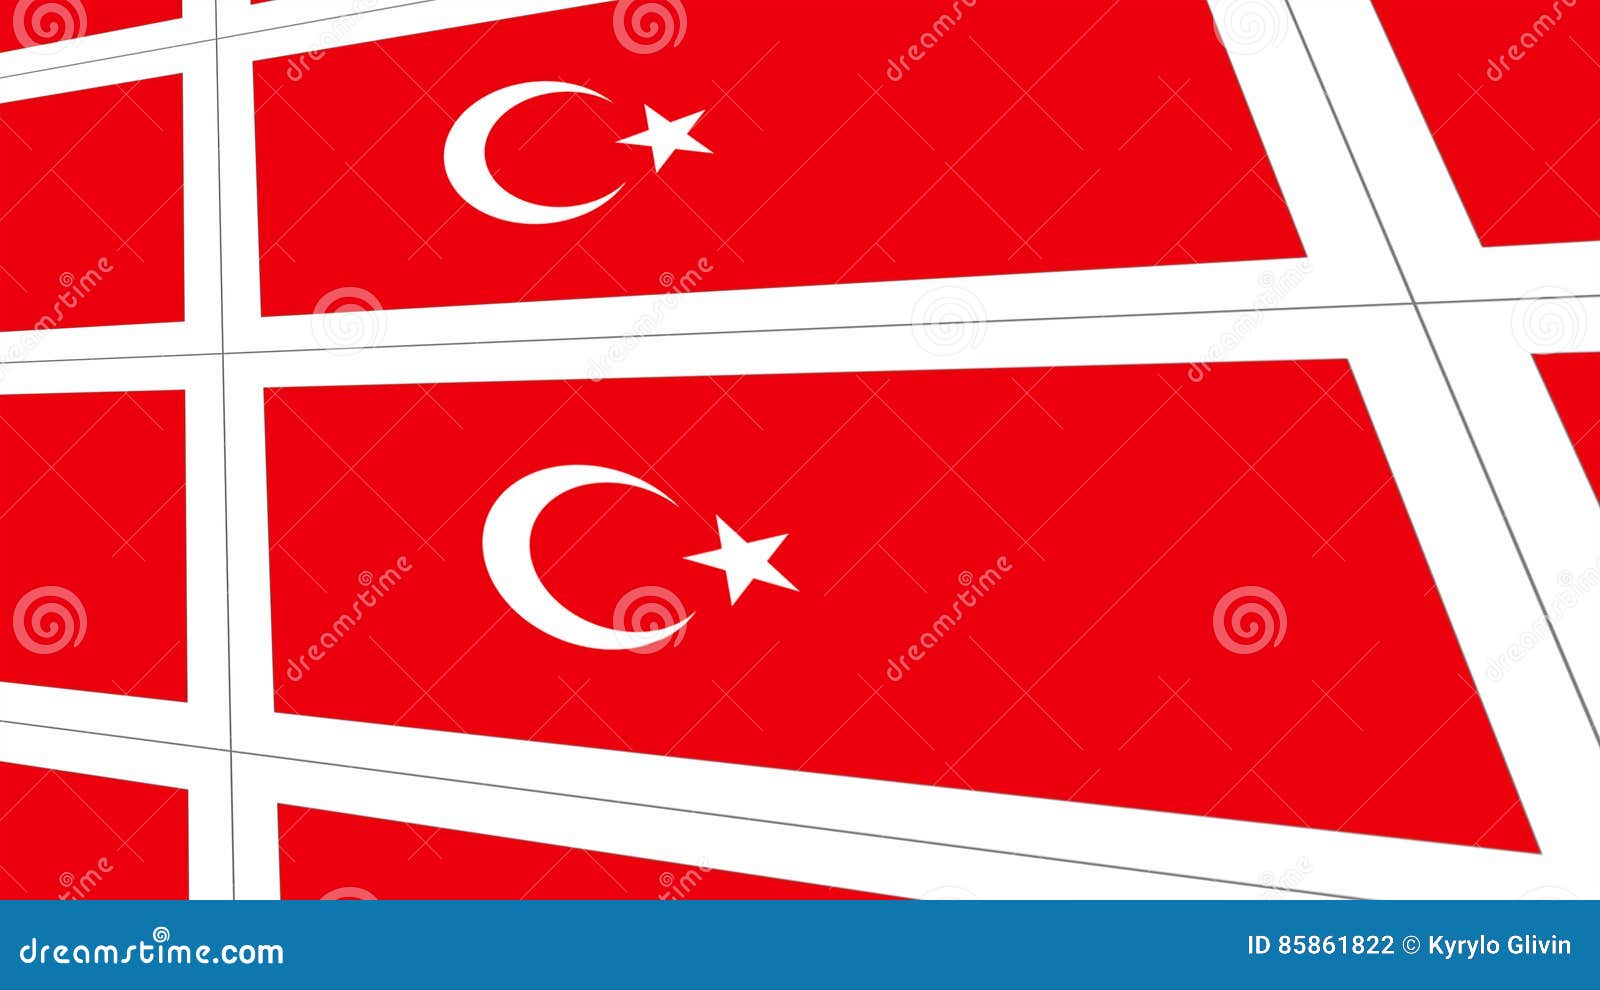 Турецкий флаг времен Ушакова. Флаг Турции при Наполеоне. Турецкий флаг 1775 год. География флаги Турция. Сколько звезд на флаге турции